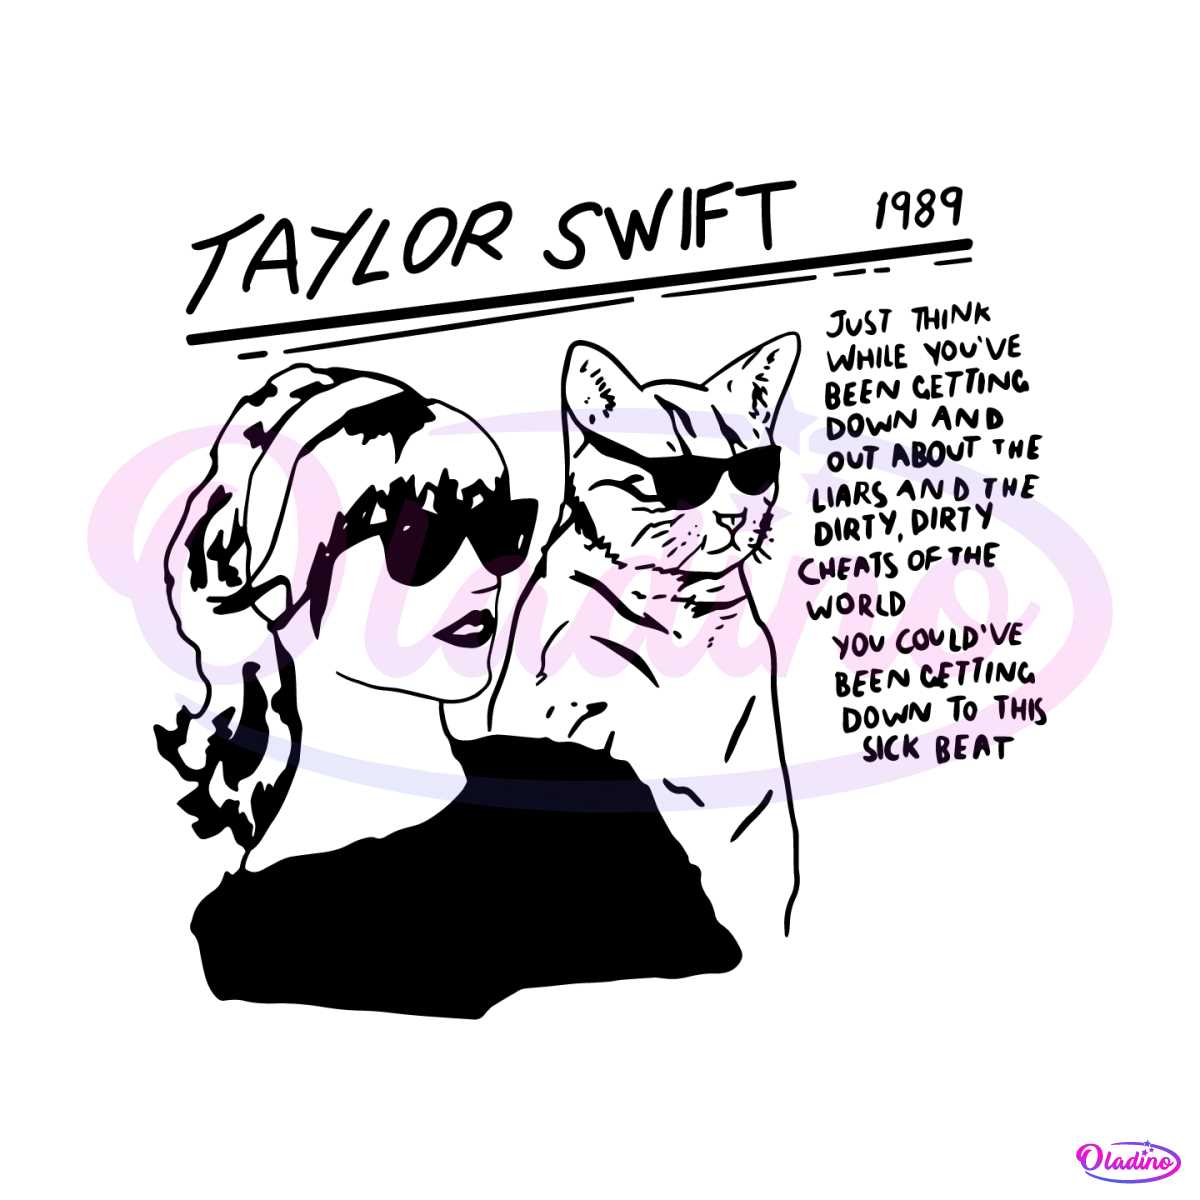 taylor-swift-1989-reputation-cat-reputation-album-svg-cricut-file